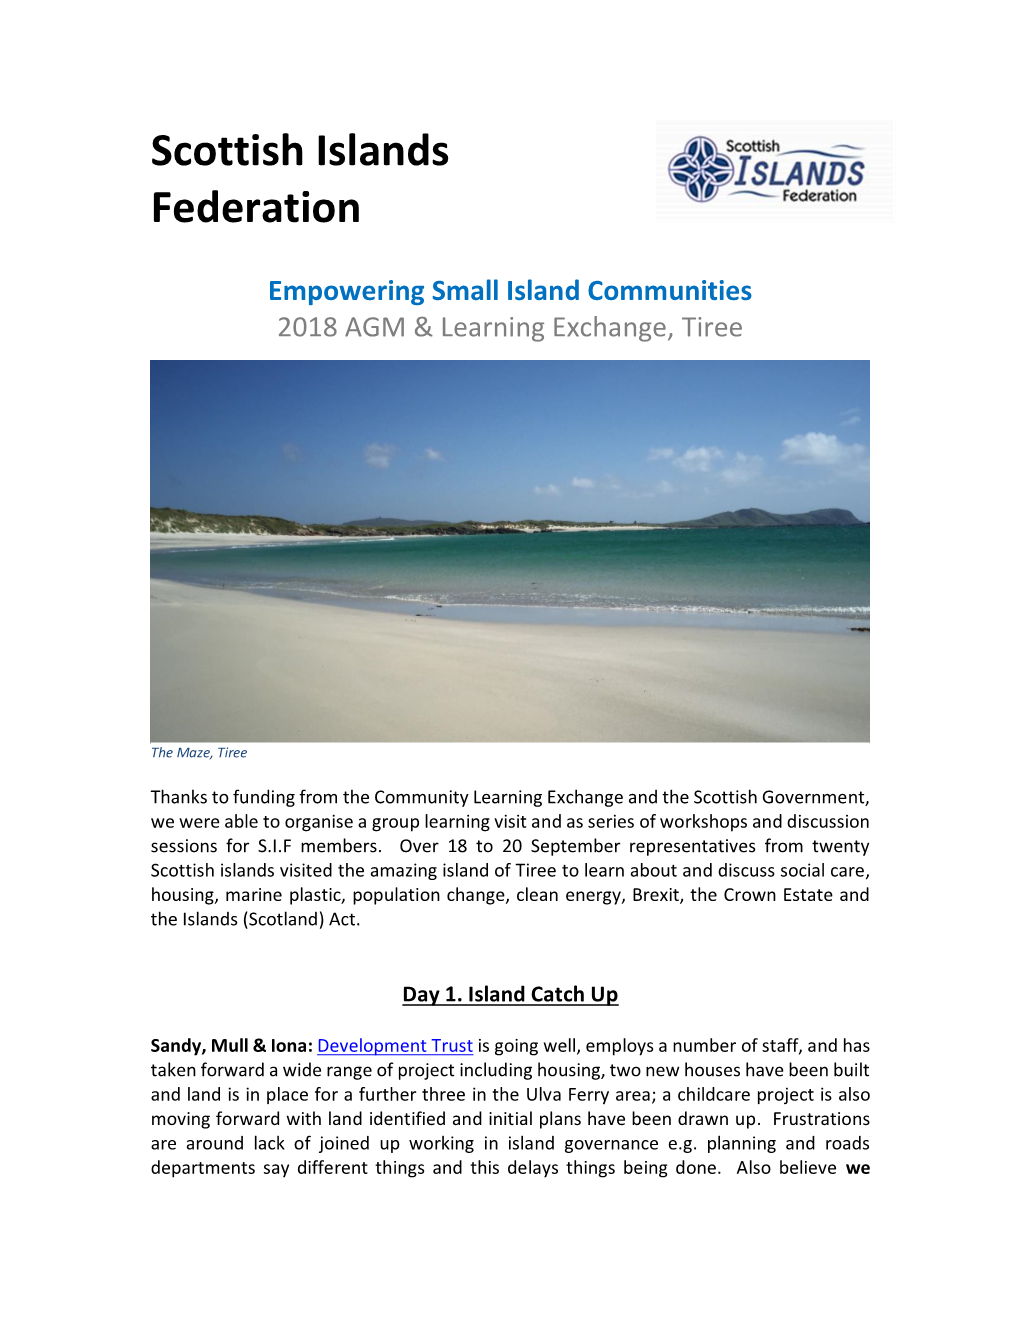 Scottish Islands Federation – Tiree Report